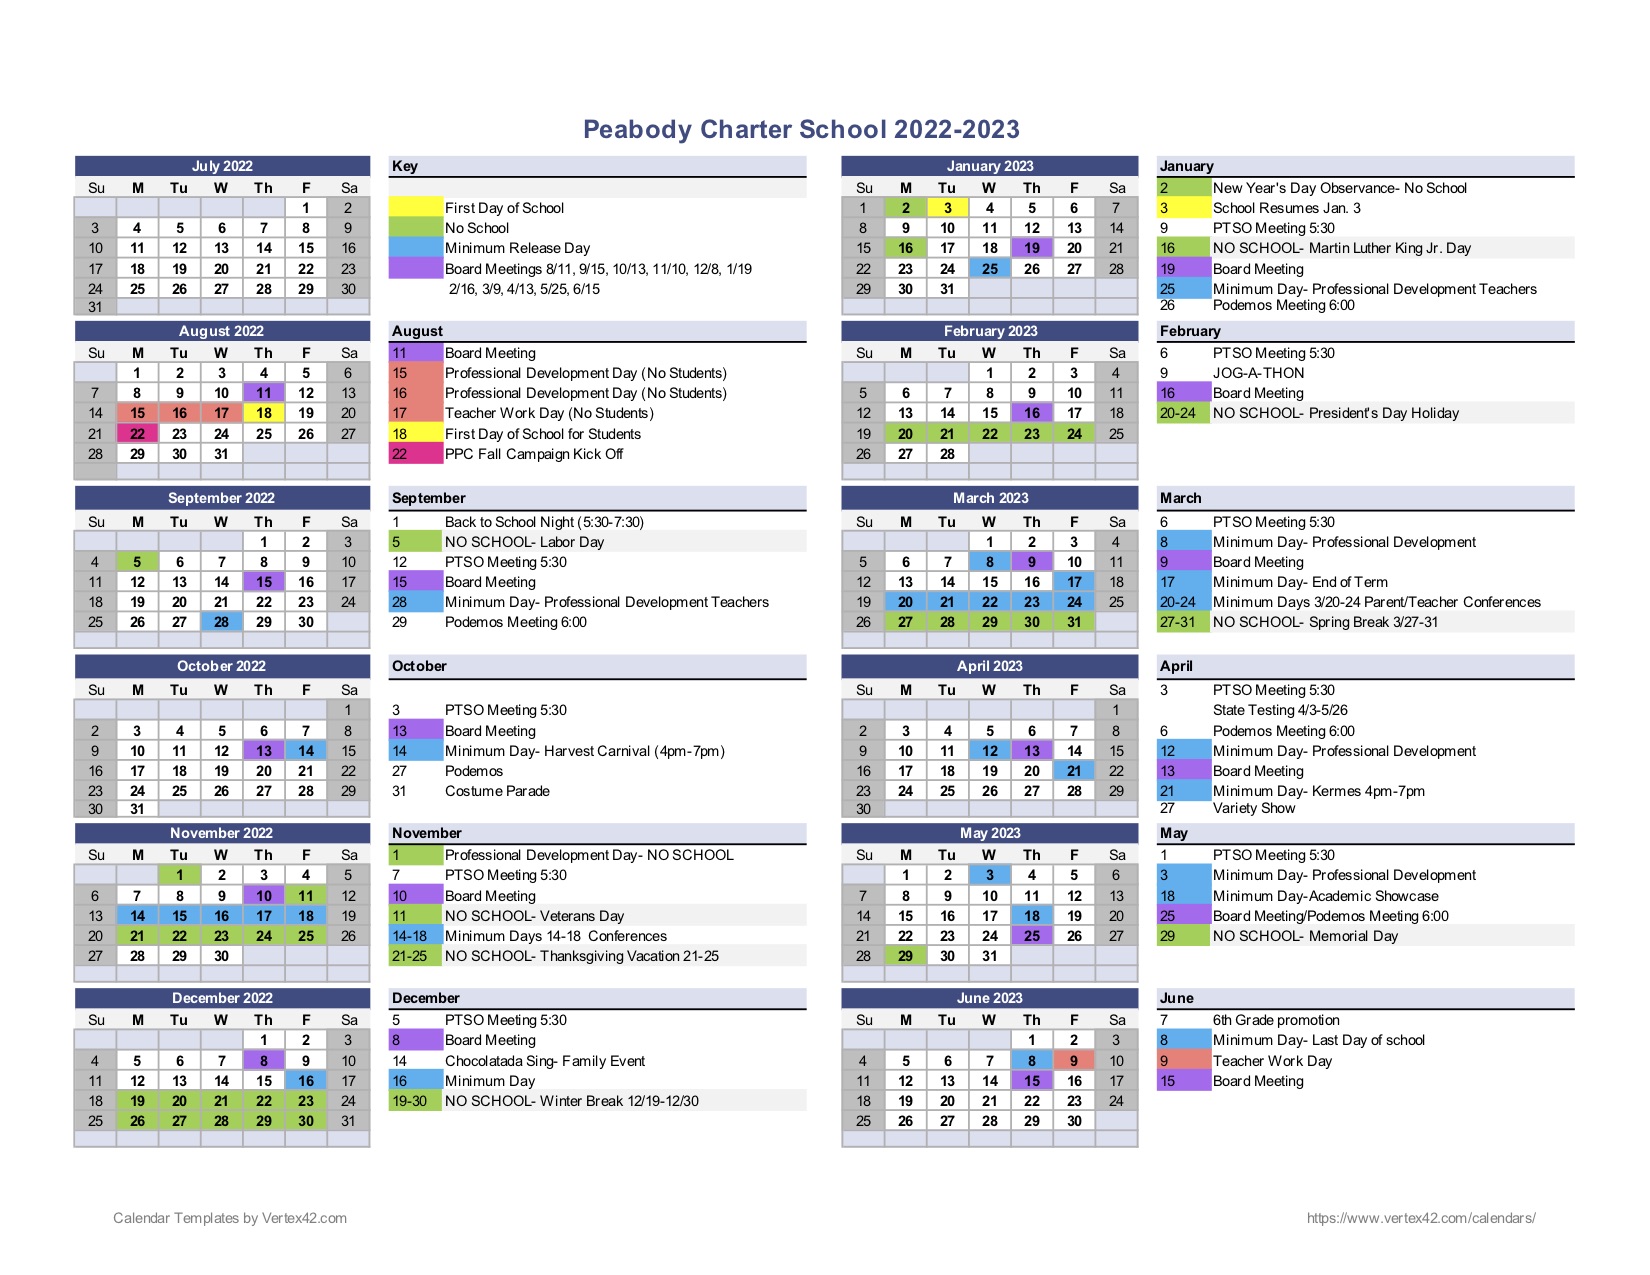 Peabody Calendar 22-23